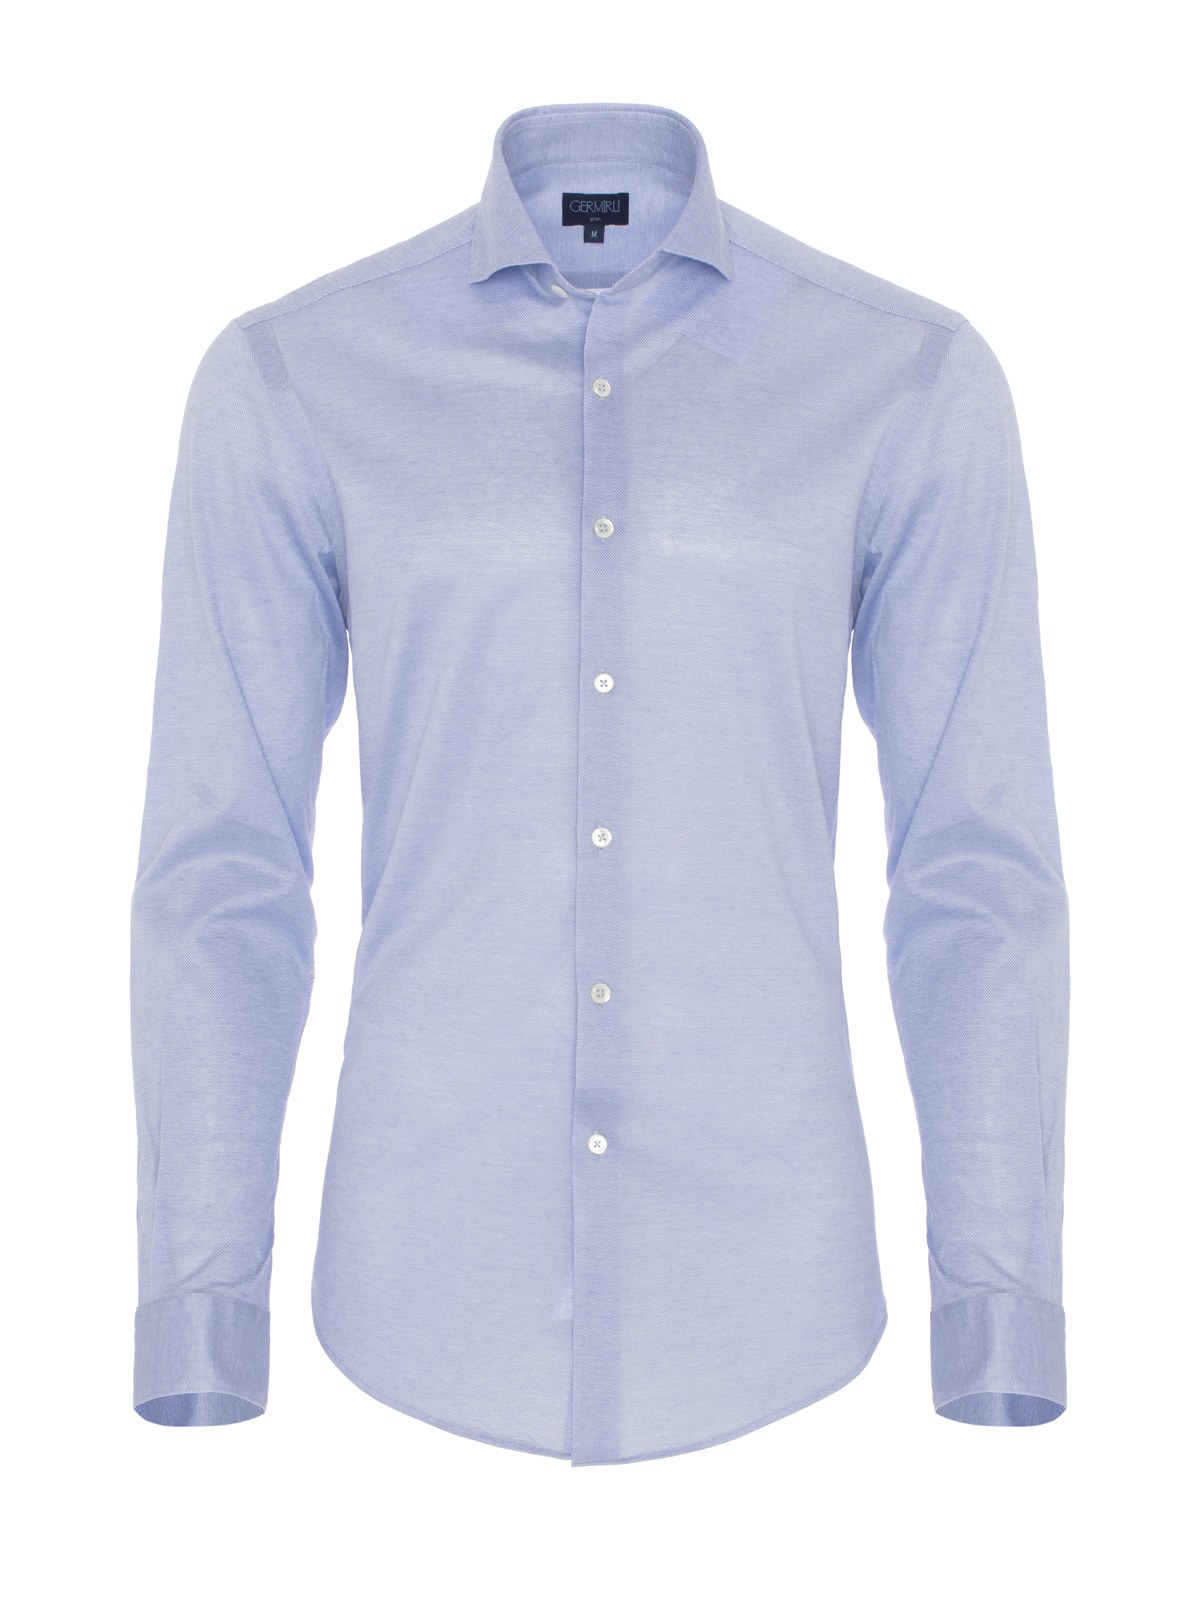 Germirli - Germirli Açık Mavi Klasik Yaka Piquet Örme Slim Fit Gömlek